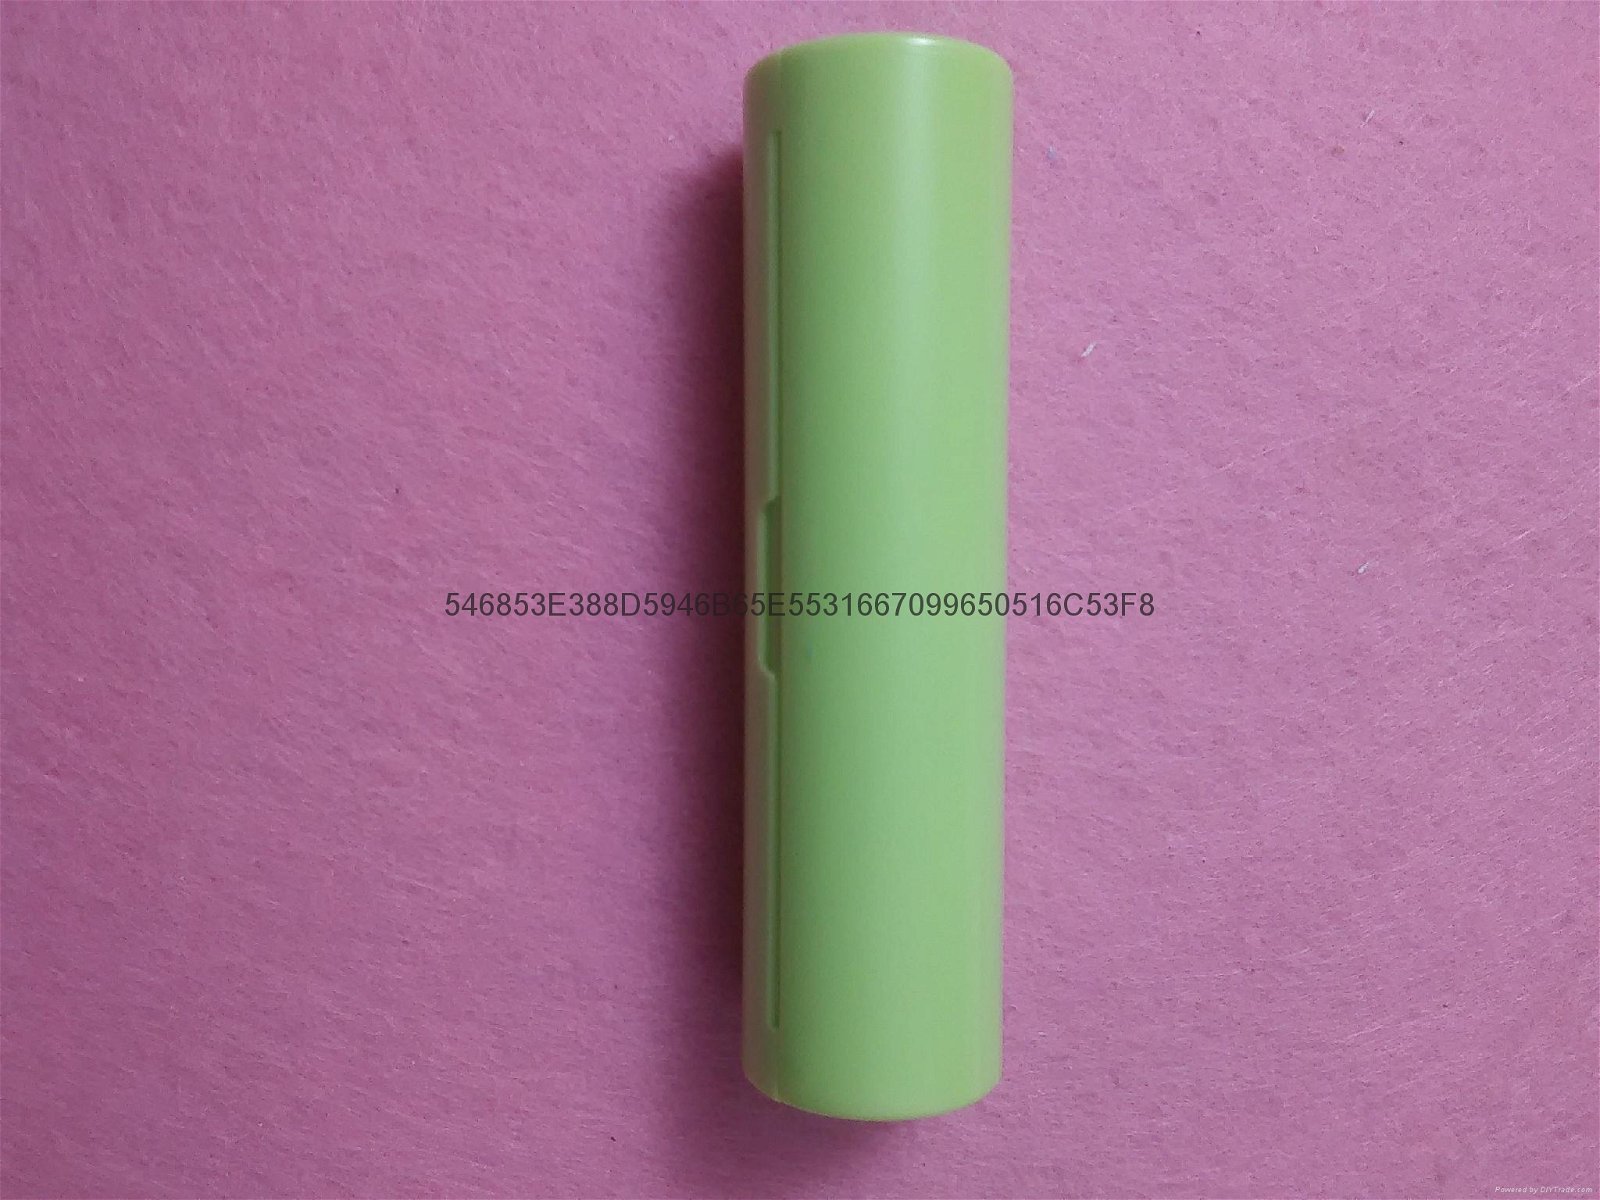 Convenient, quick environmental paper soap volume 3